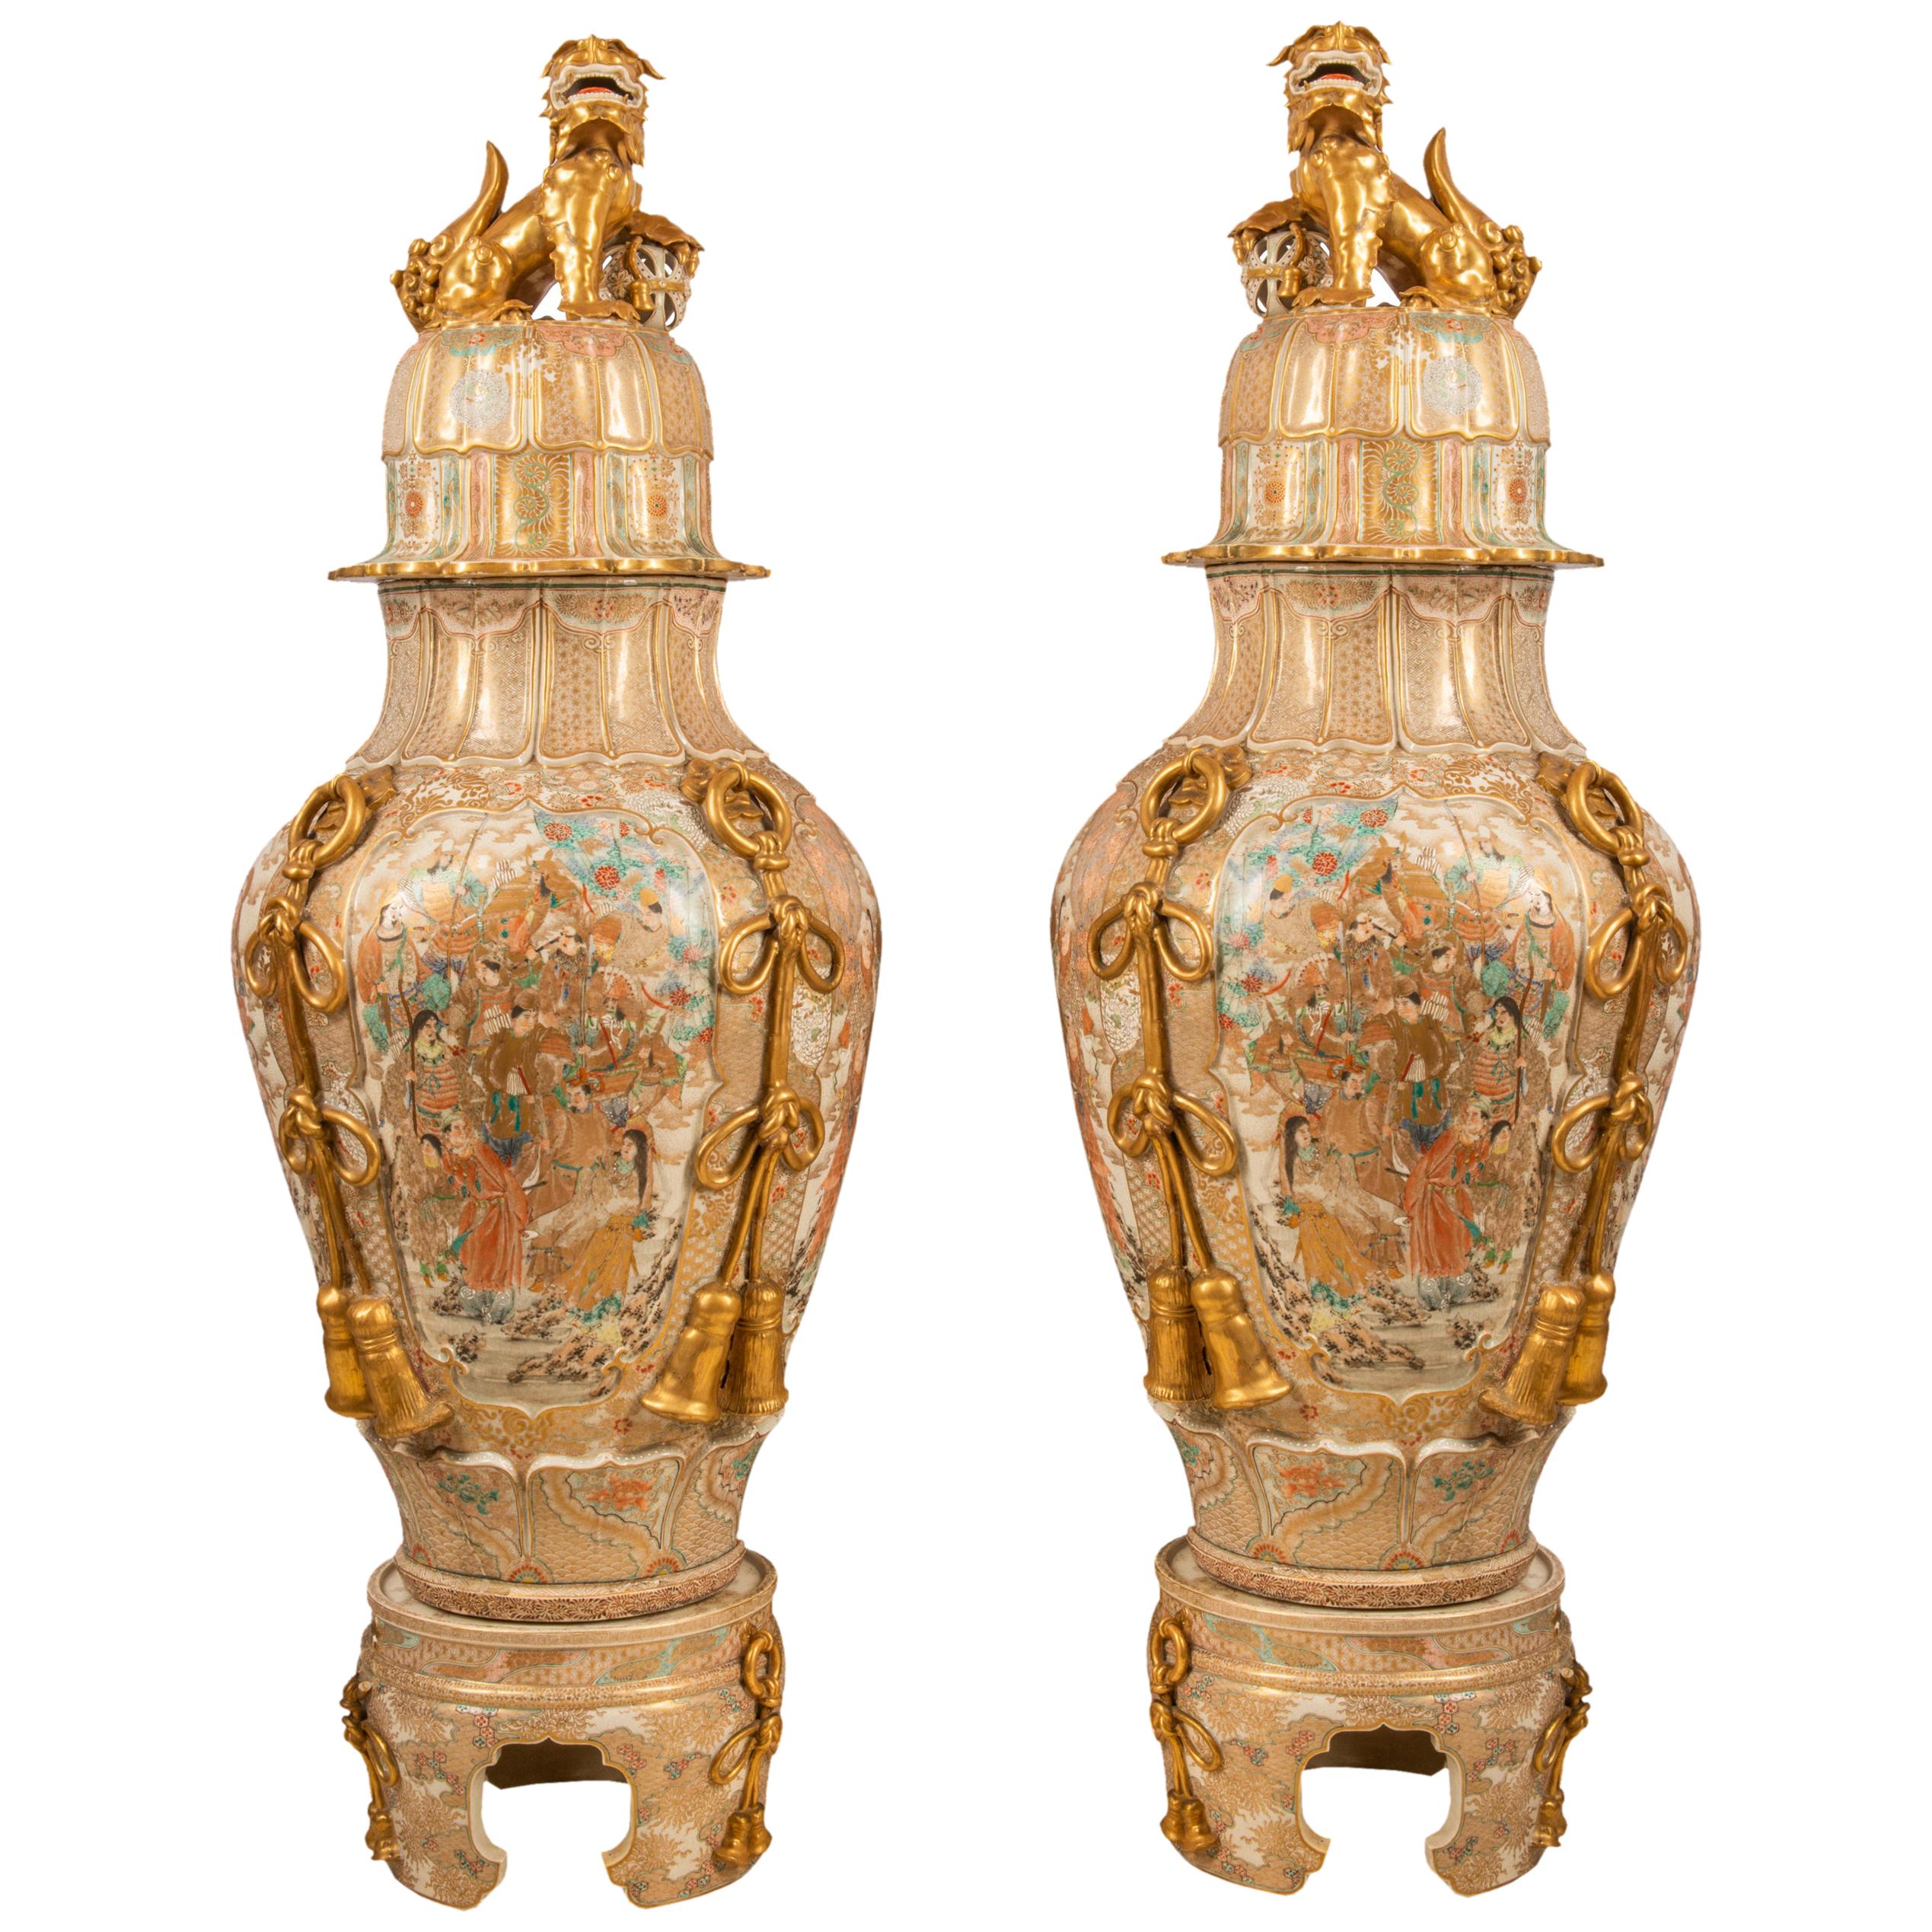 Large Important Pair of 19th Century Japanese Satsuma Lidded Vases